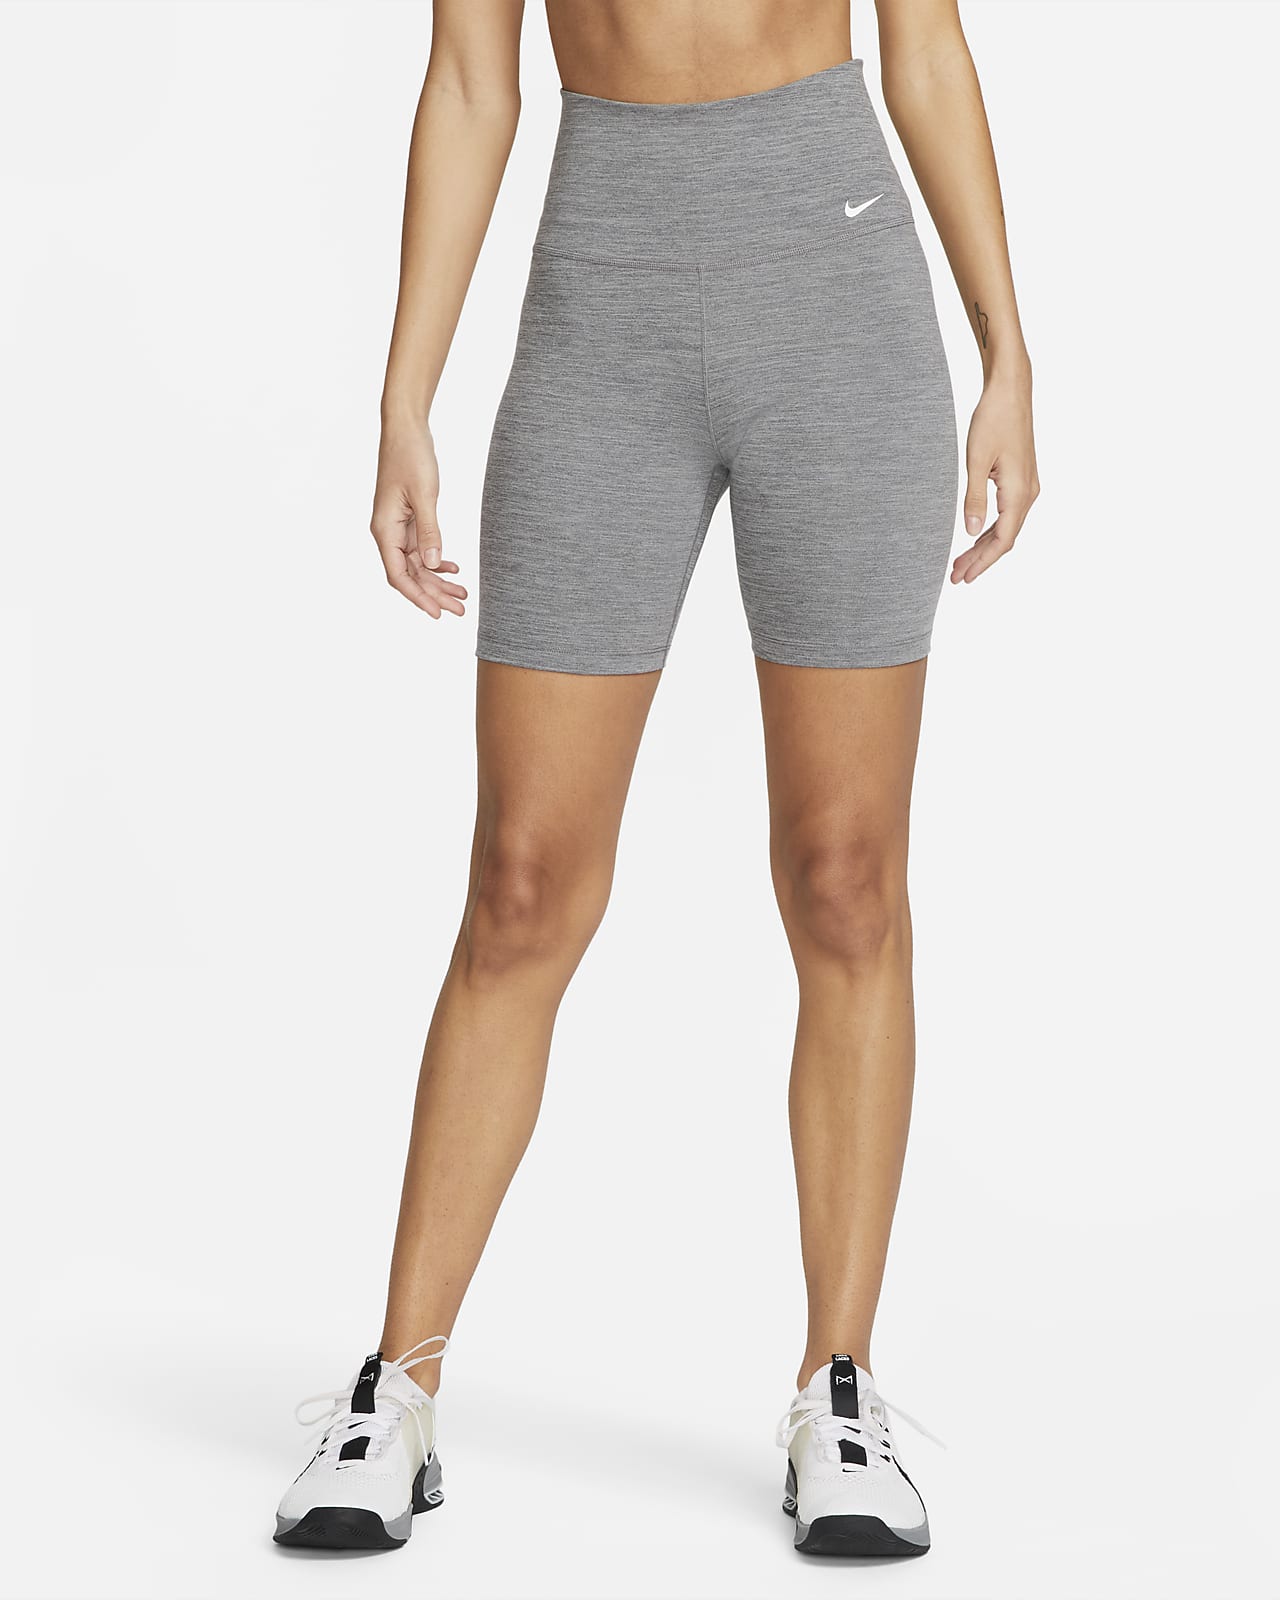 Nike, Shorts, Nike Womens Size S Drifit Short Gray